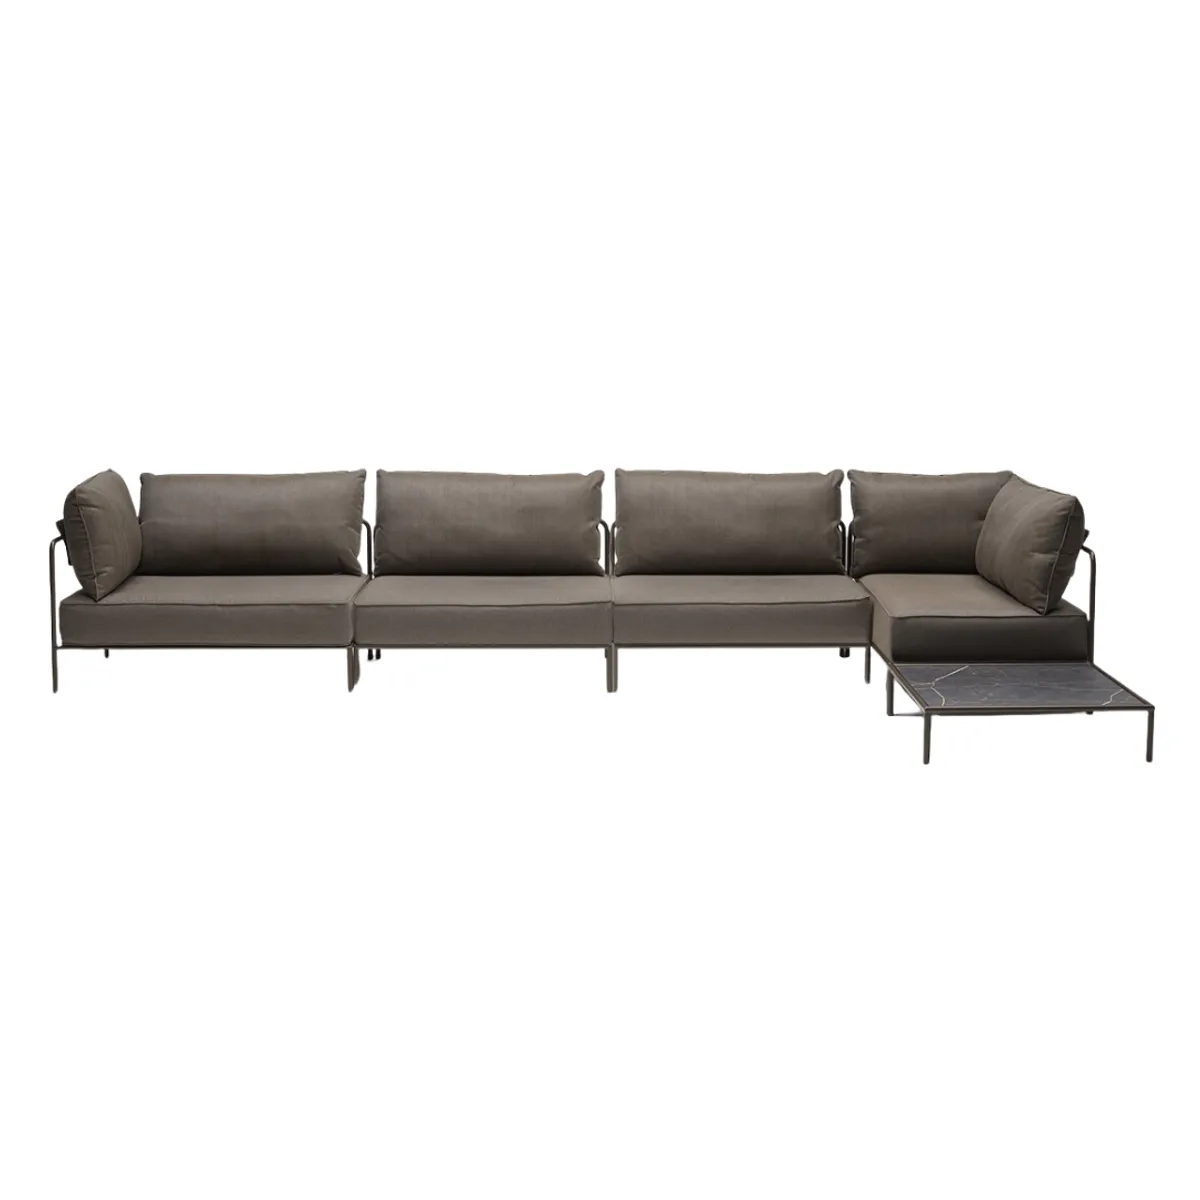 Dahlia modular sofa 4